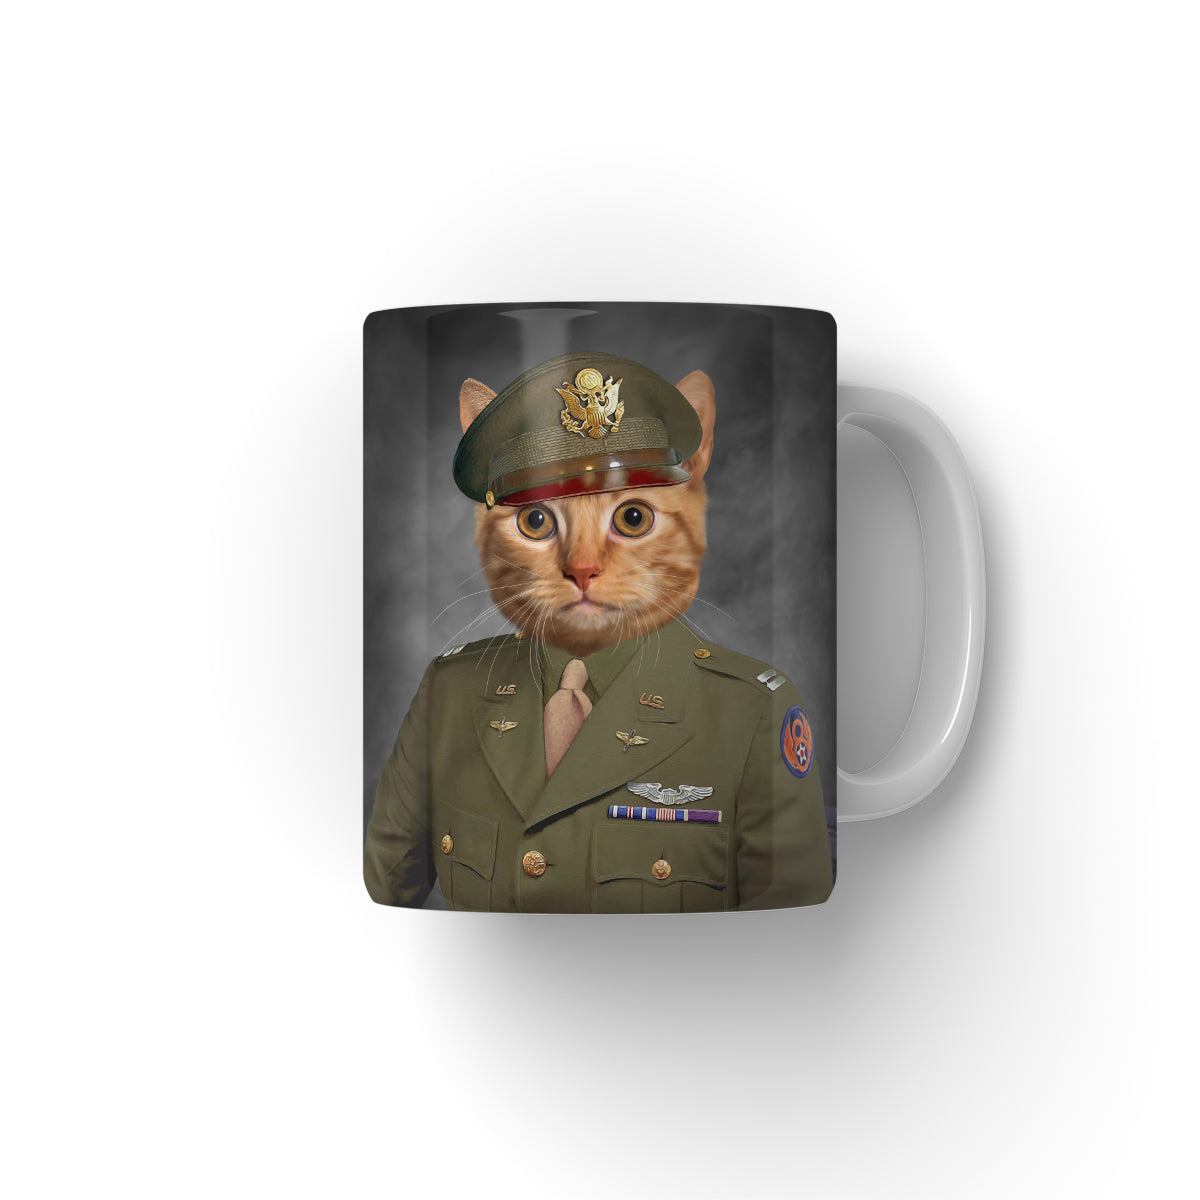 The Military Officer: Custom Pet Coffee Mug